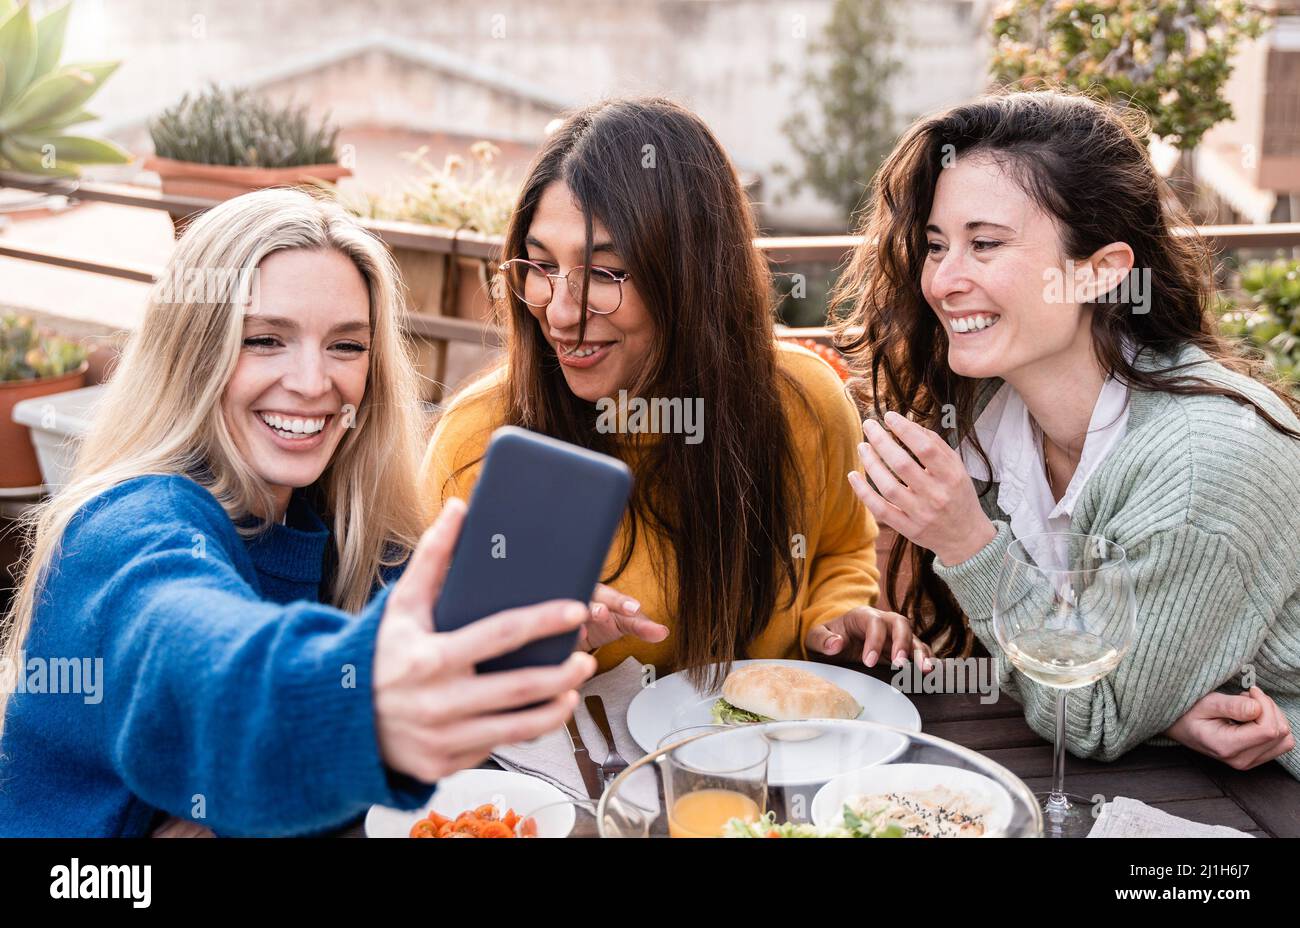 Multiracial Happy Friends Having Fun Taking Selfie With Mobile Phone At Vegan Restaurant Outdoor 